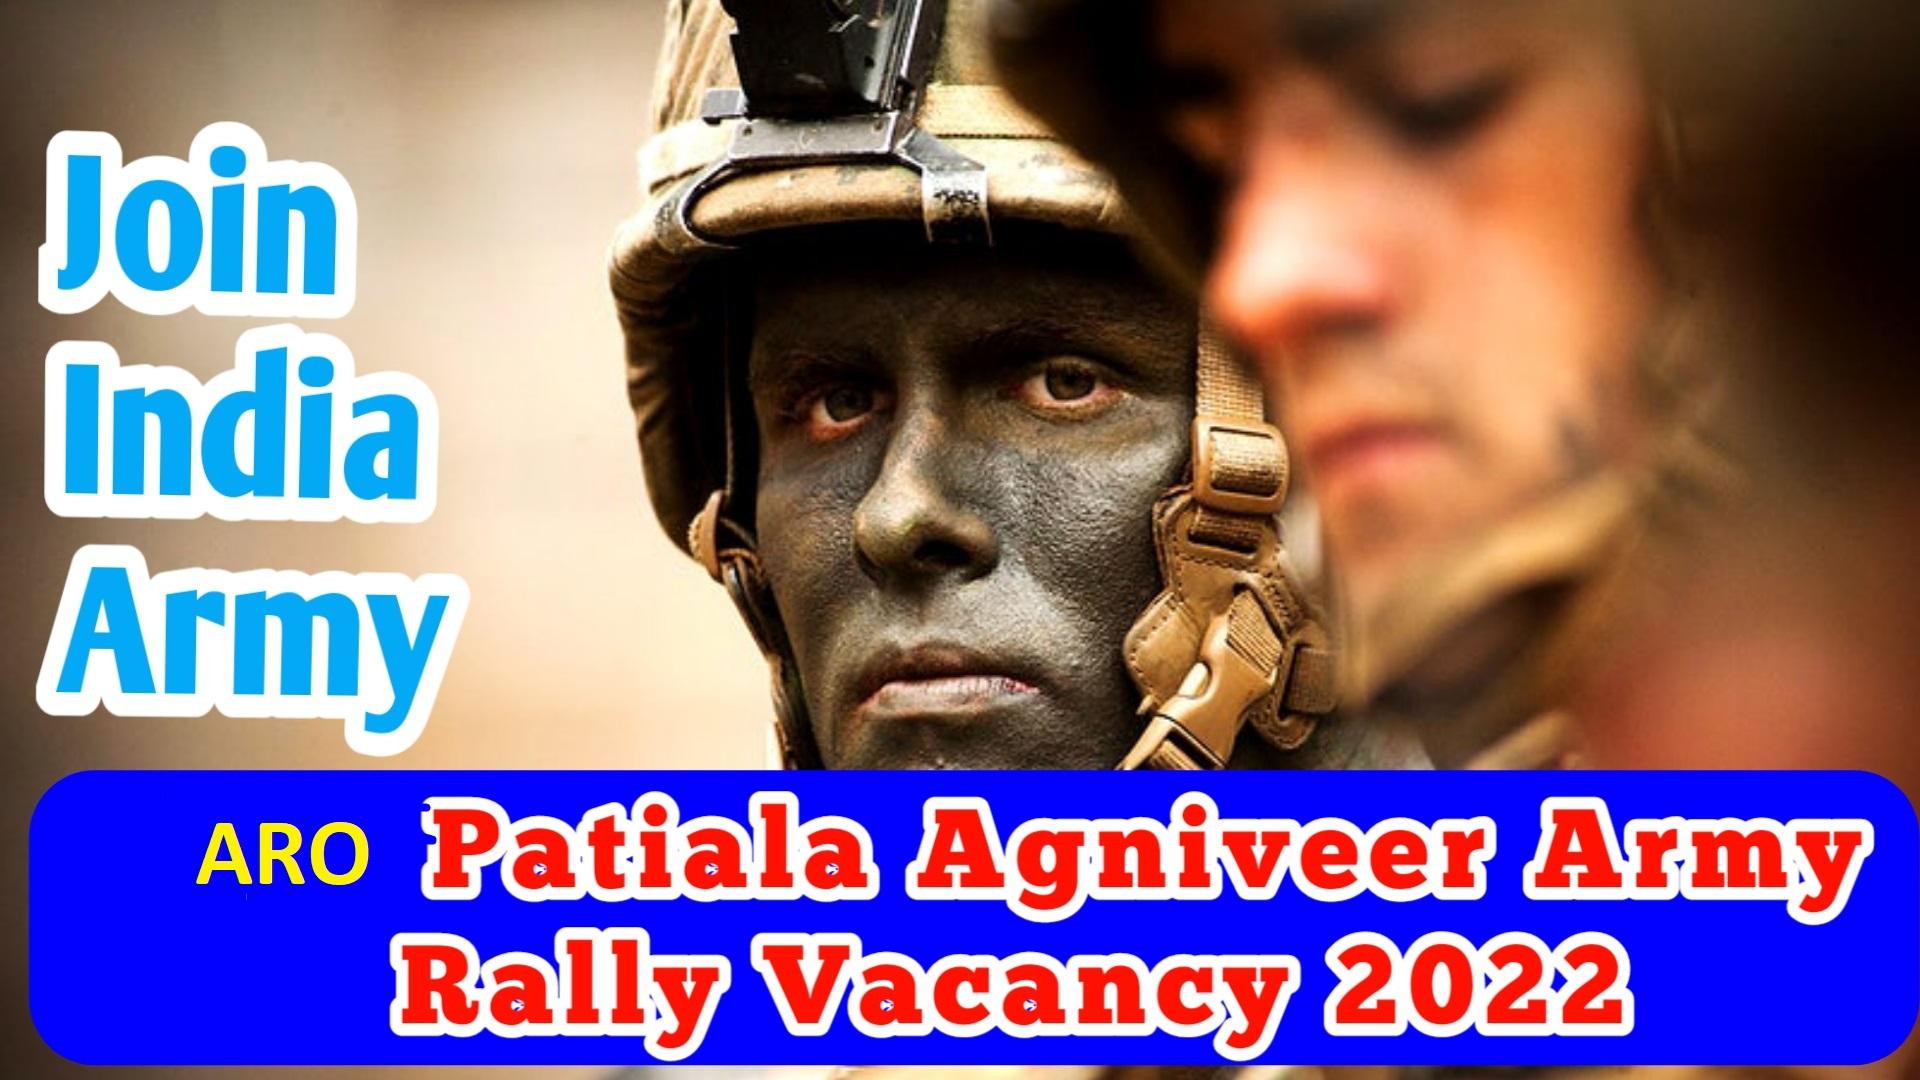 ARO Patiala Agniveer Army Rally Vacancy 2022